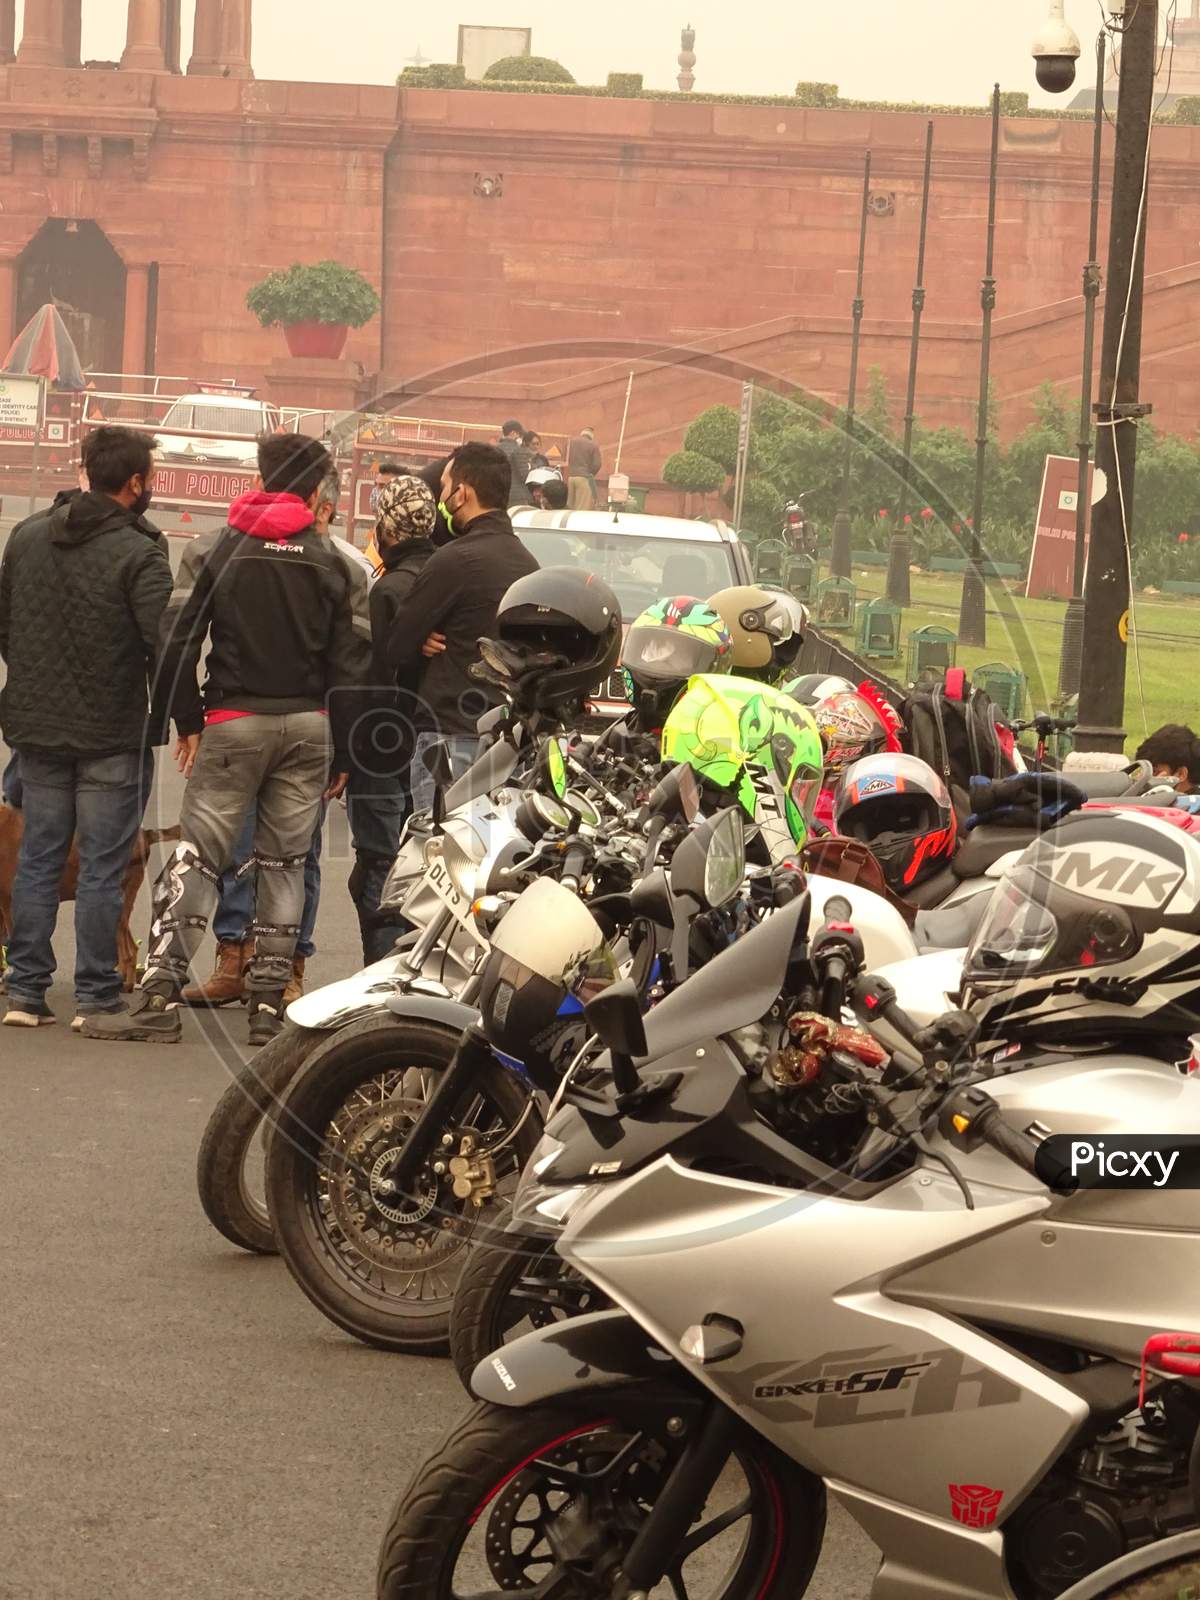 Delhi riders at India gate